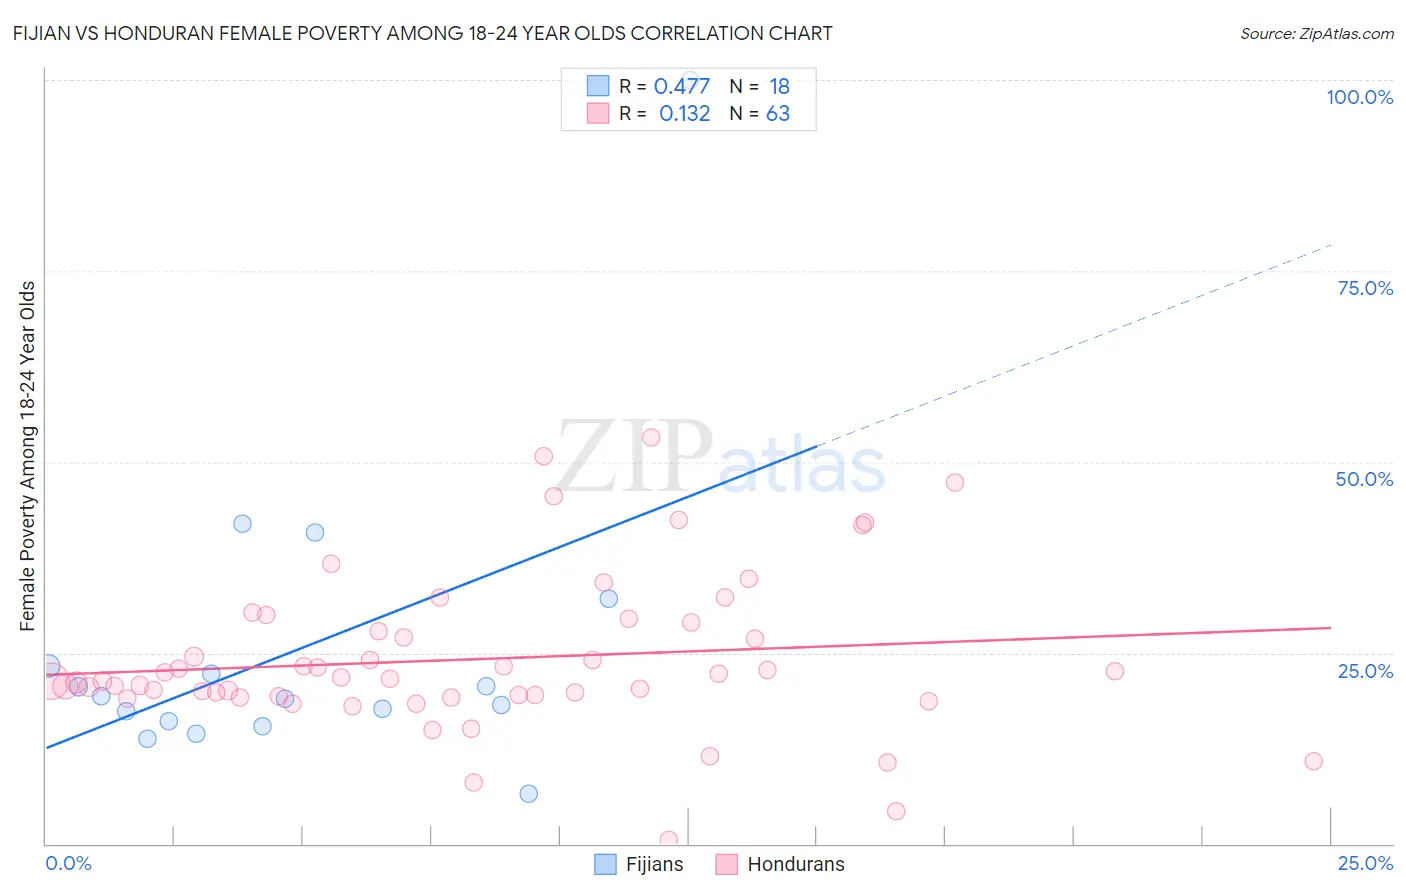 Fijian vs Honduran Female Poverty Among 18-24 Year Olds